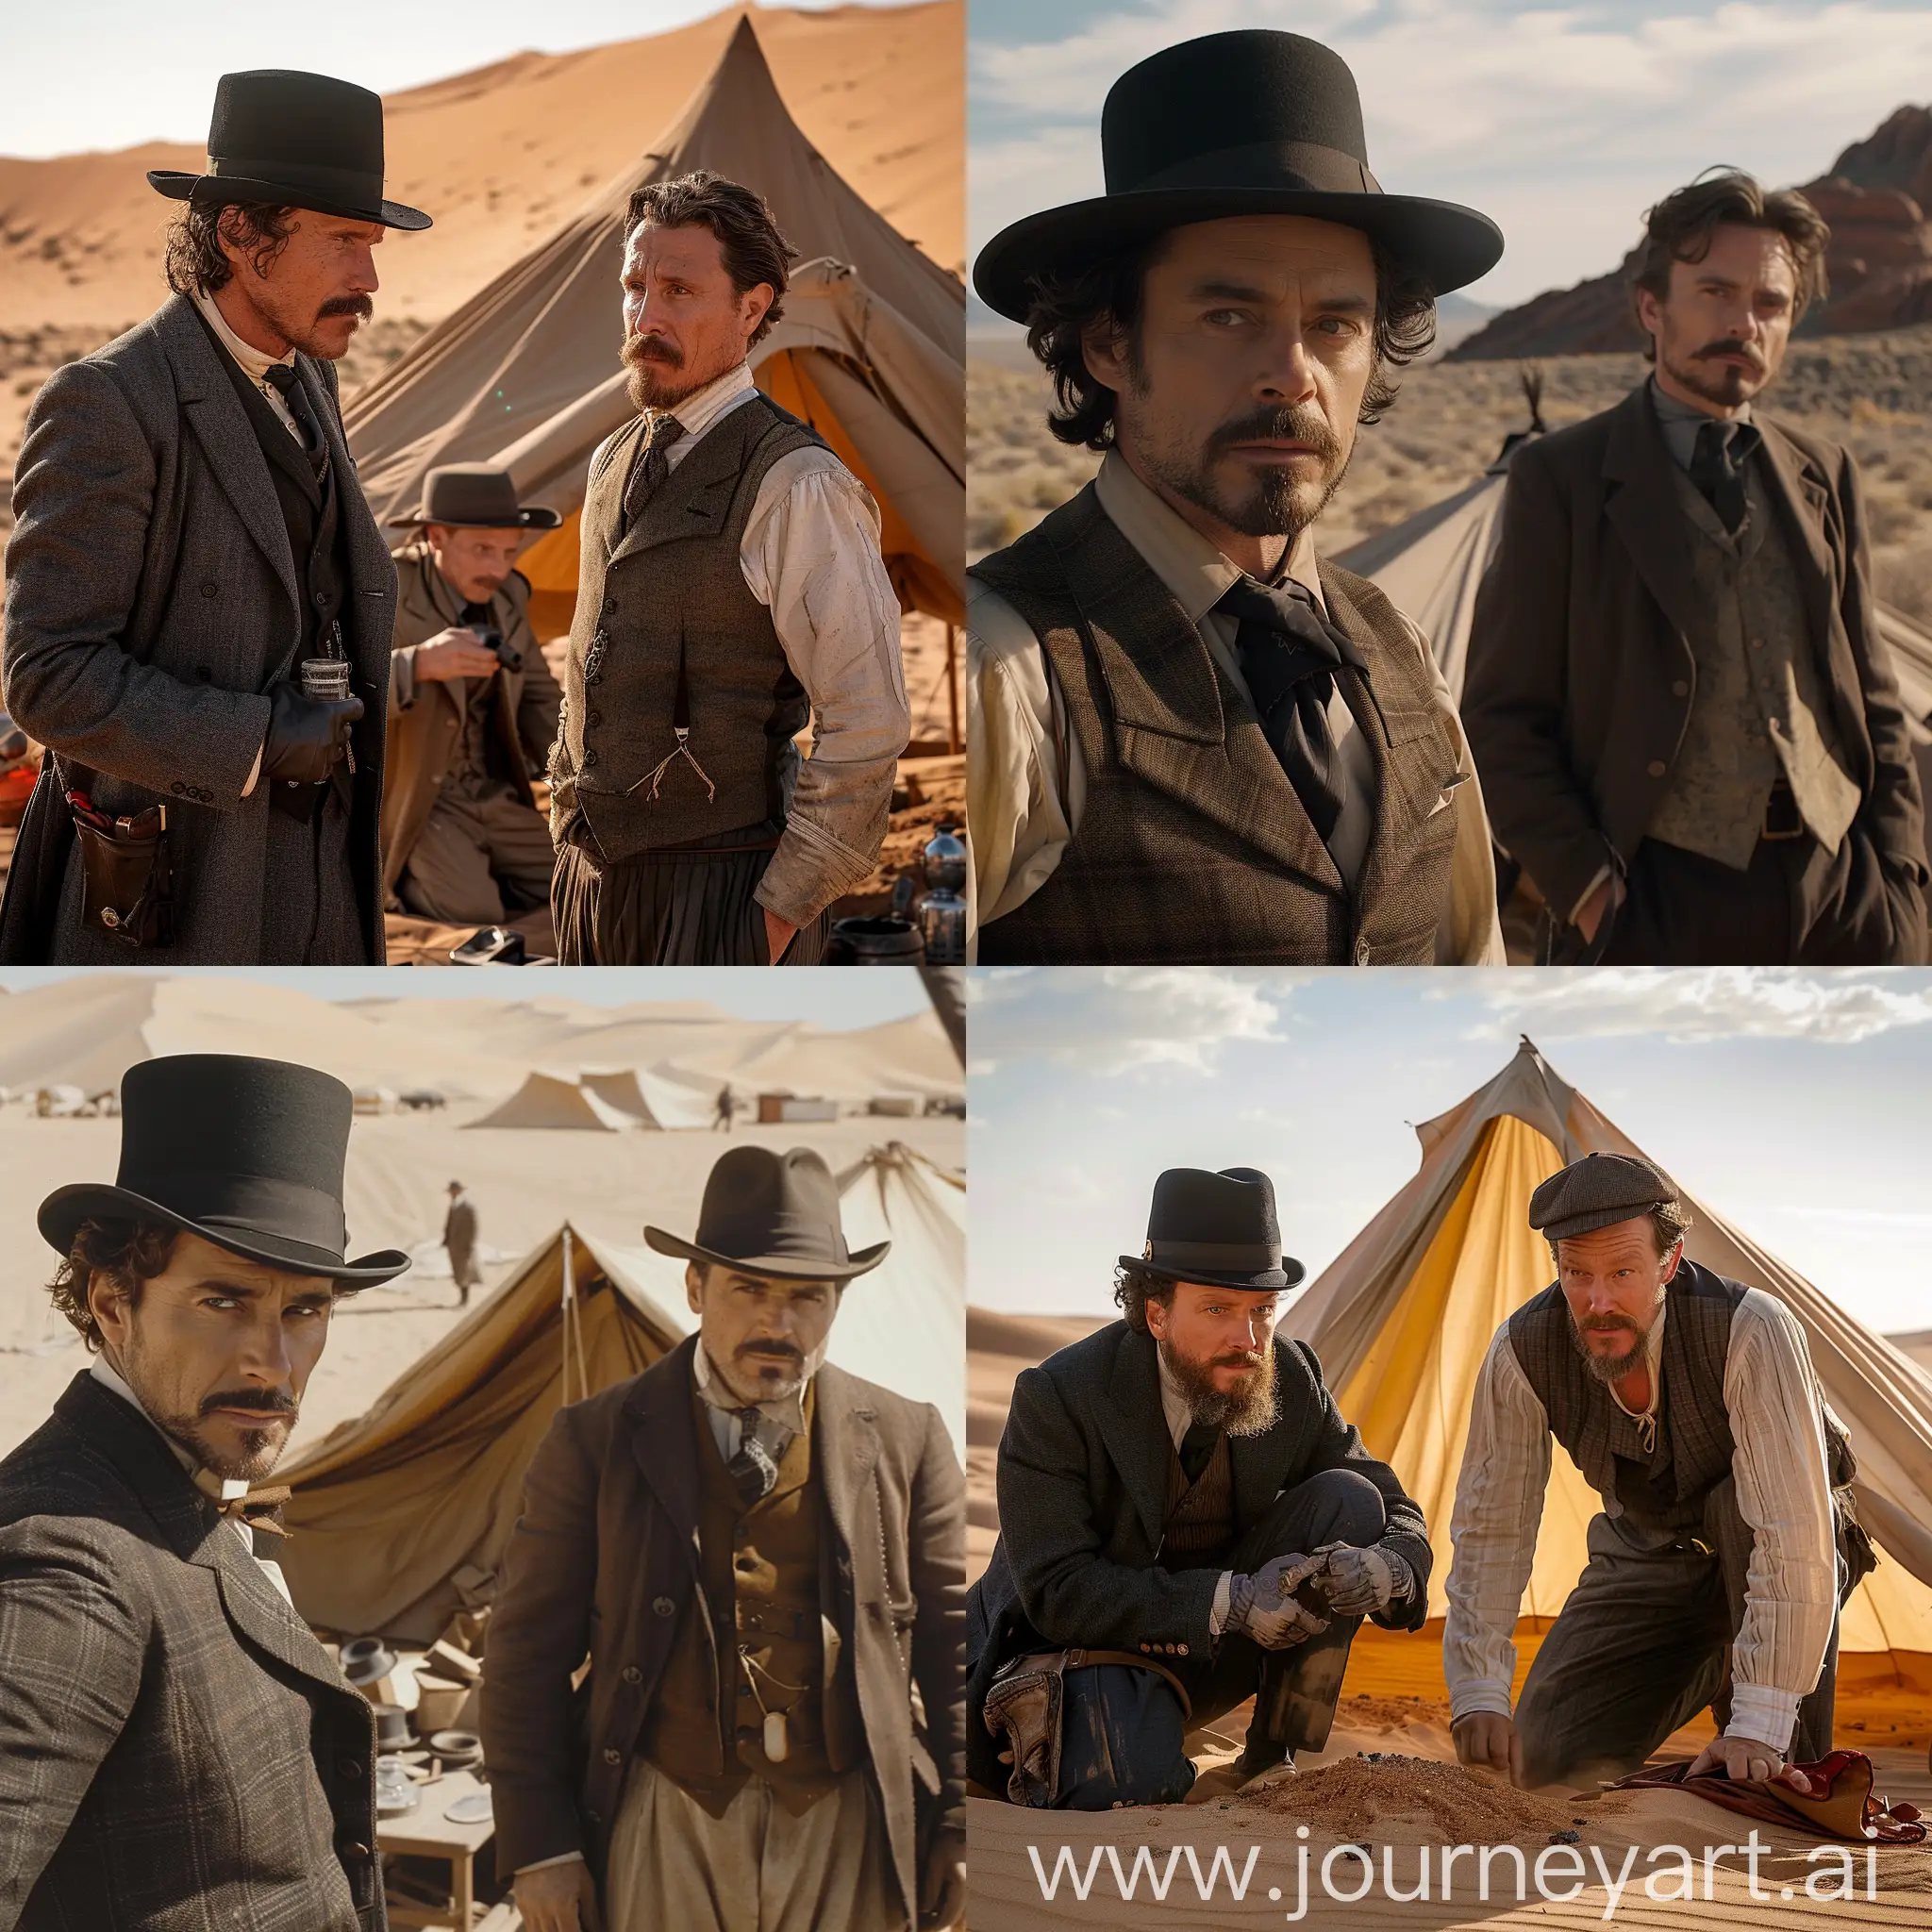 Sherlock-Holmes-and-English-Gentleman-Pitching-a-Desert-Tent